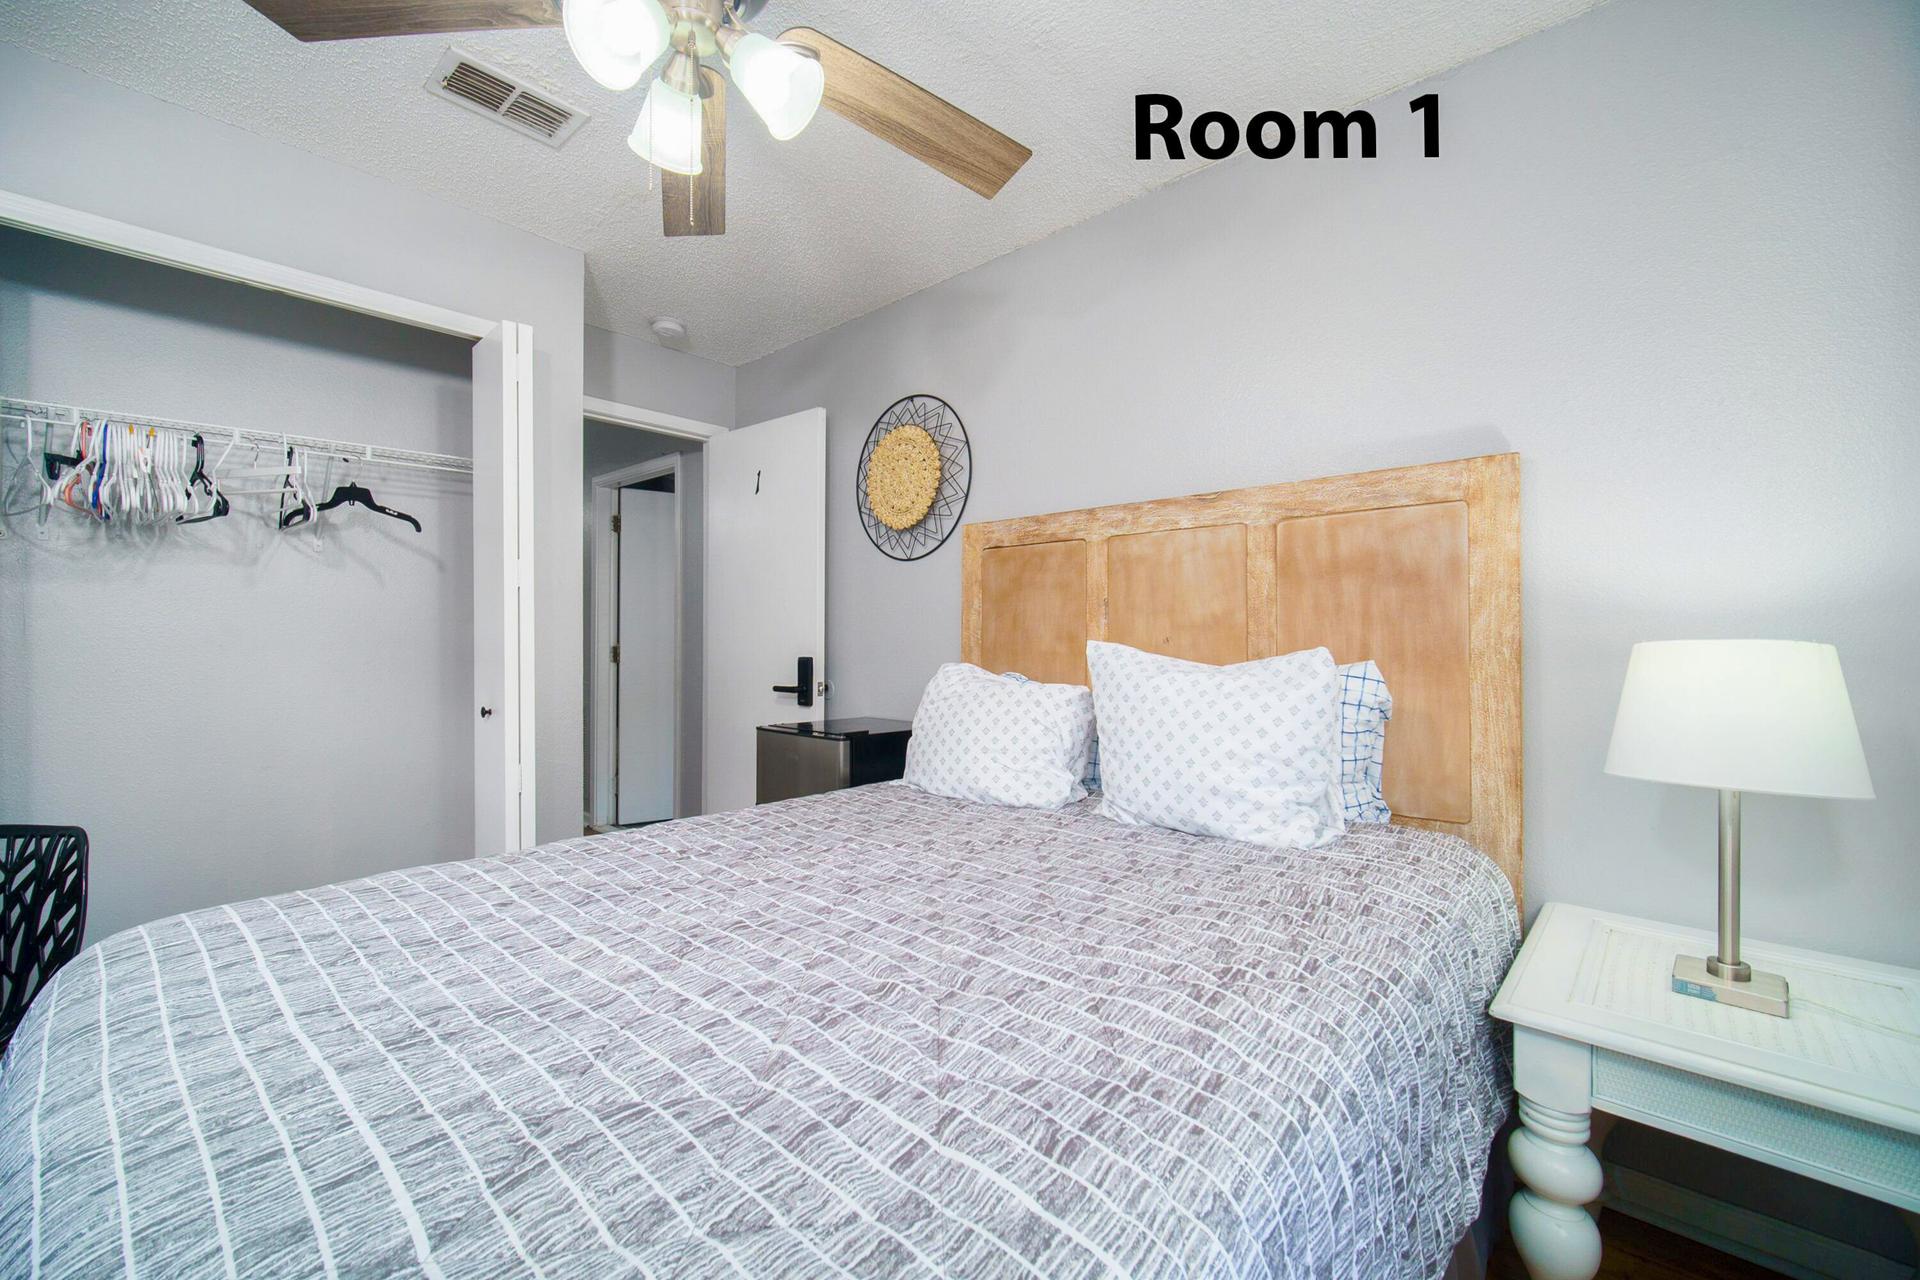 bedroom, detected:bed, ceiling fan